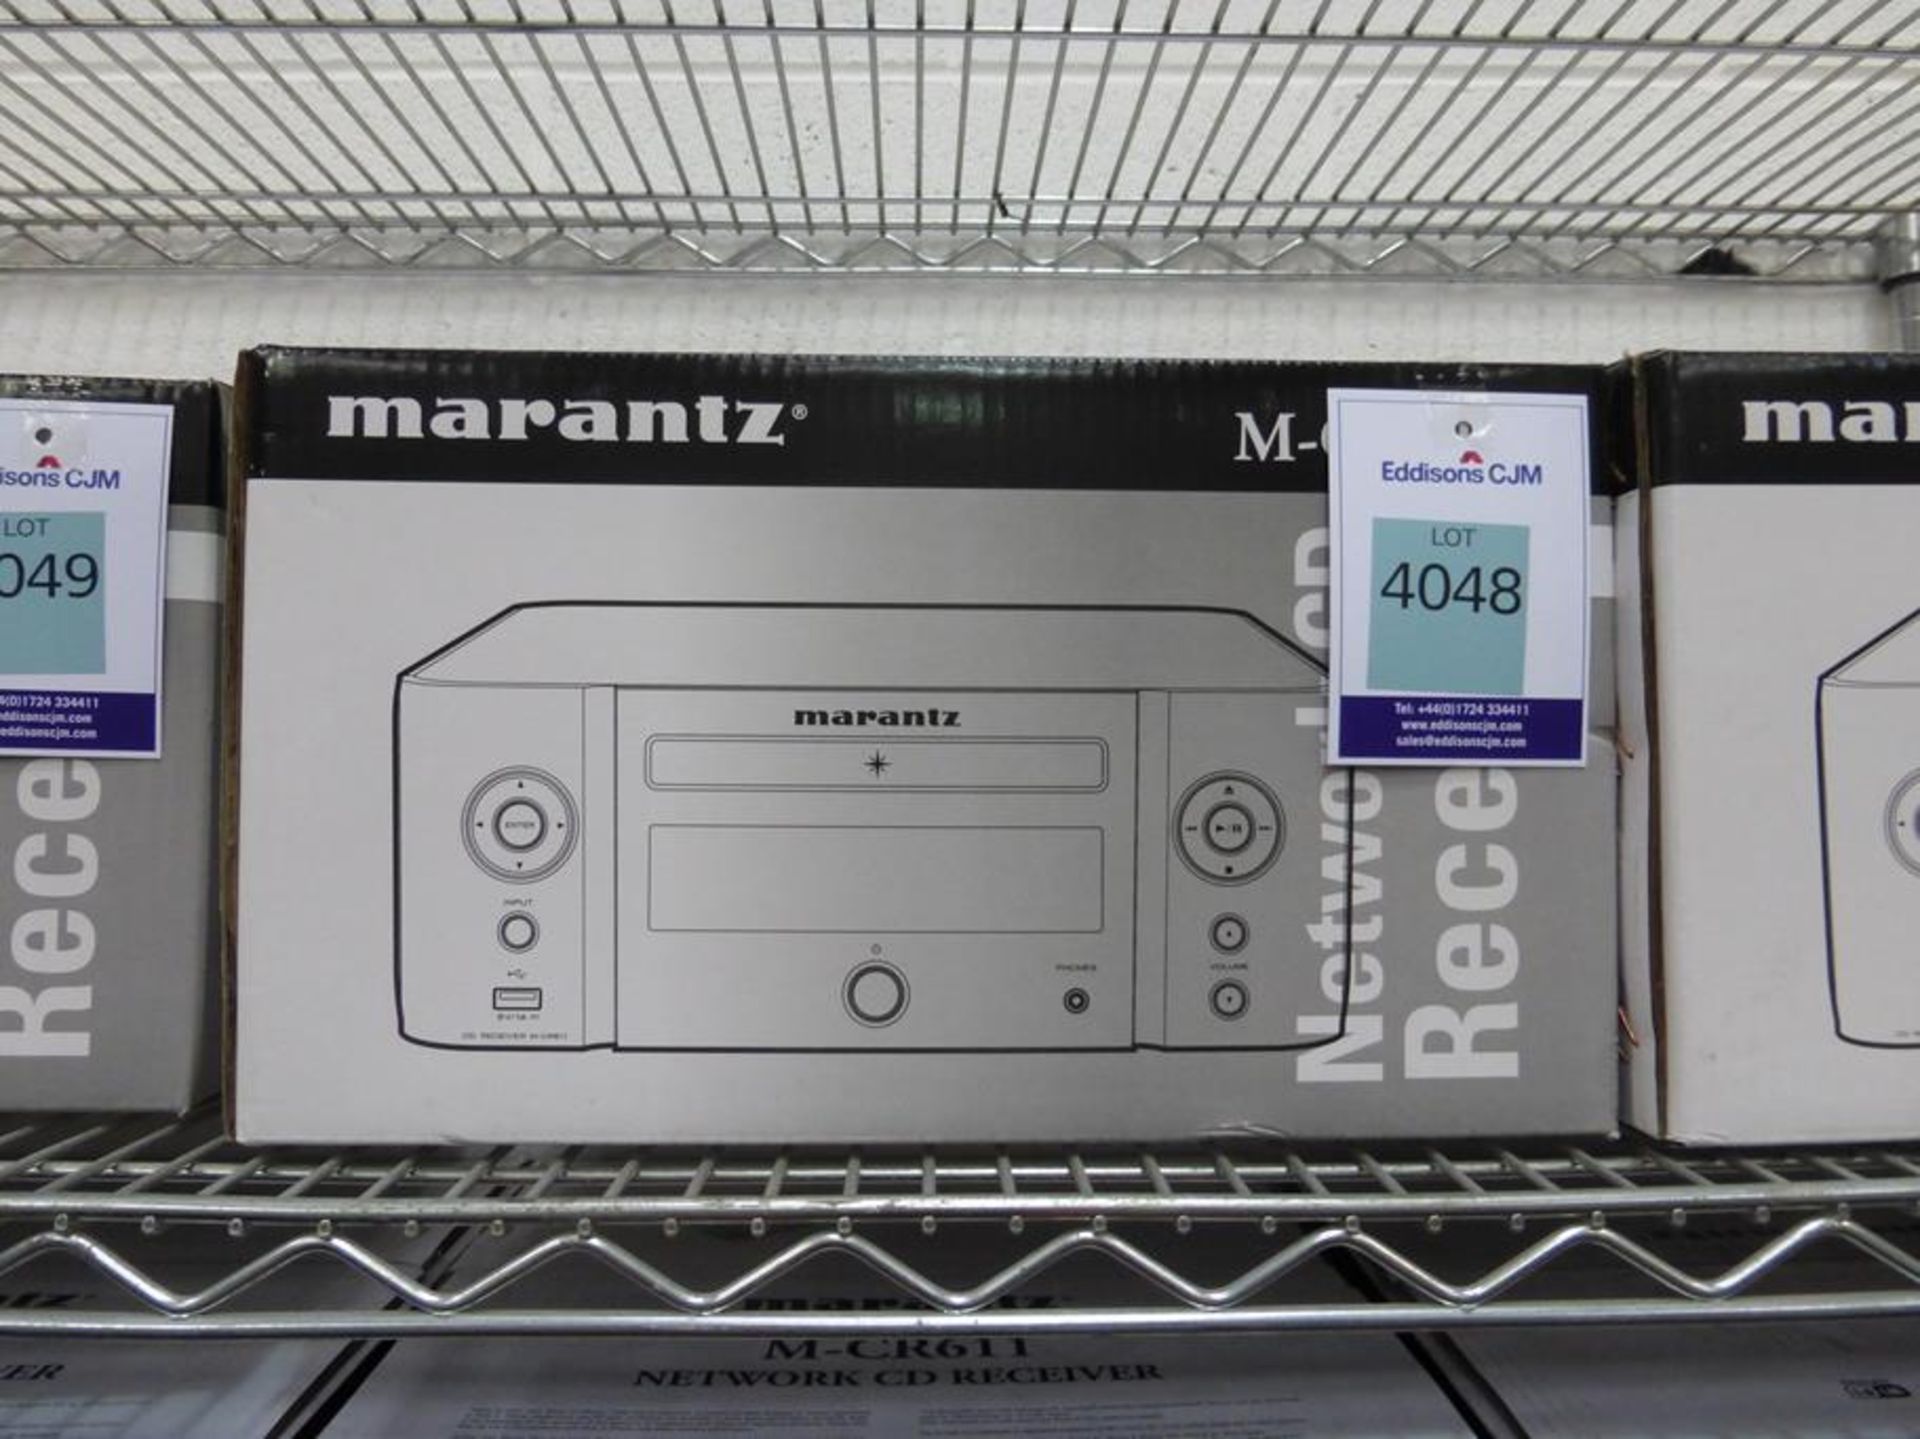 Marantz M-CR611 Network CD Receiver 'Melody Media Player' Silver